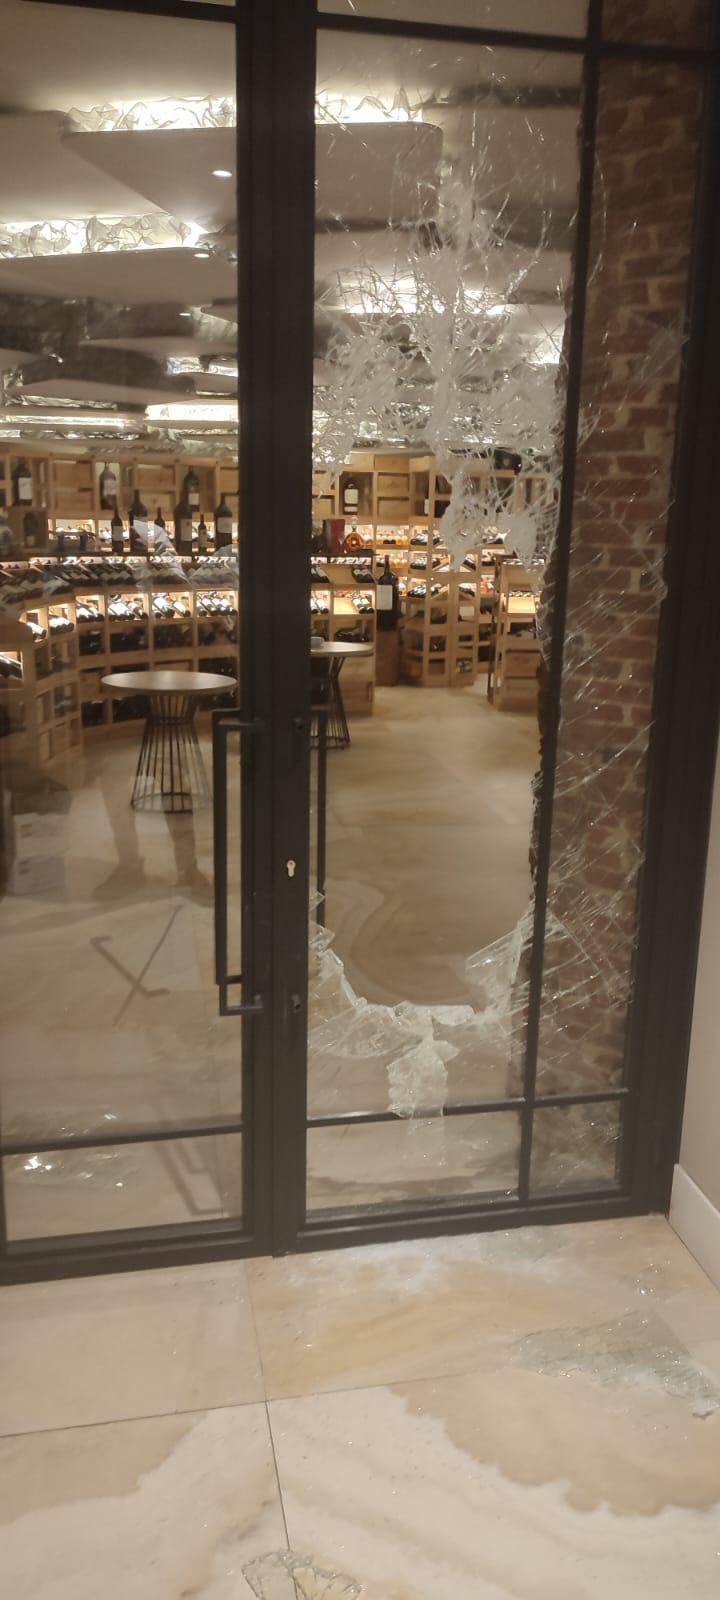 Puerta de cristal fracturada que da acceso a la bodega del restaurante Coque